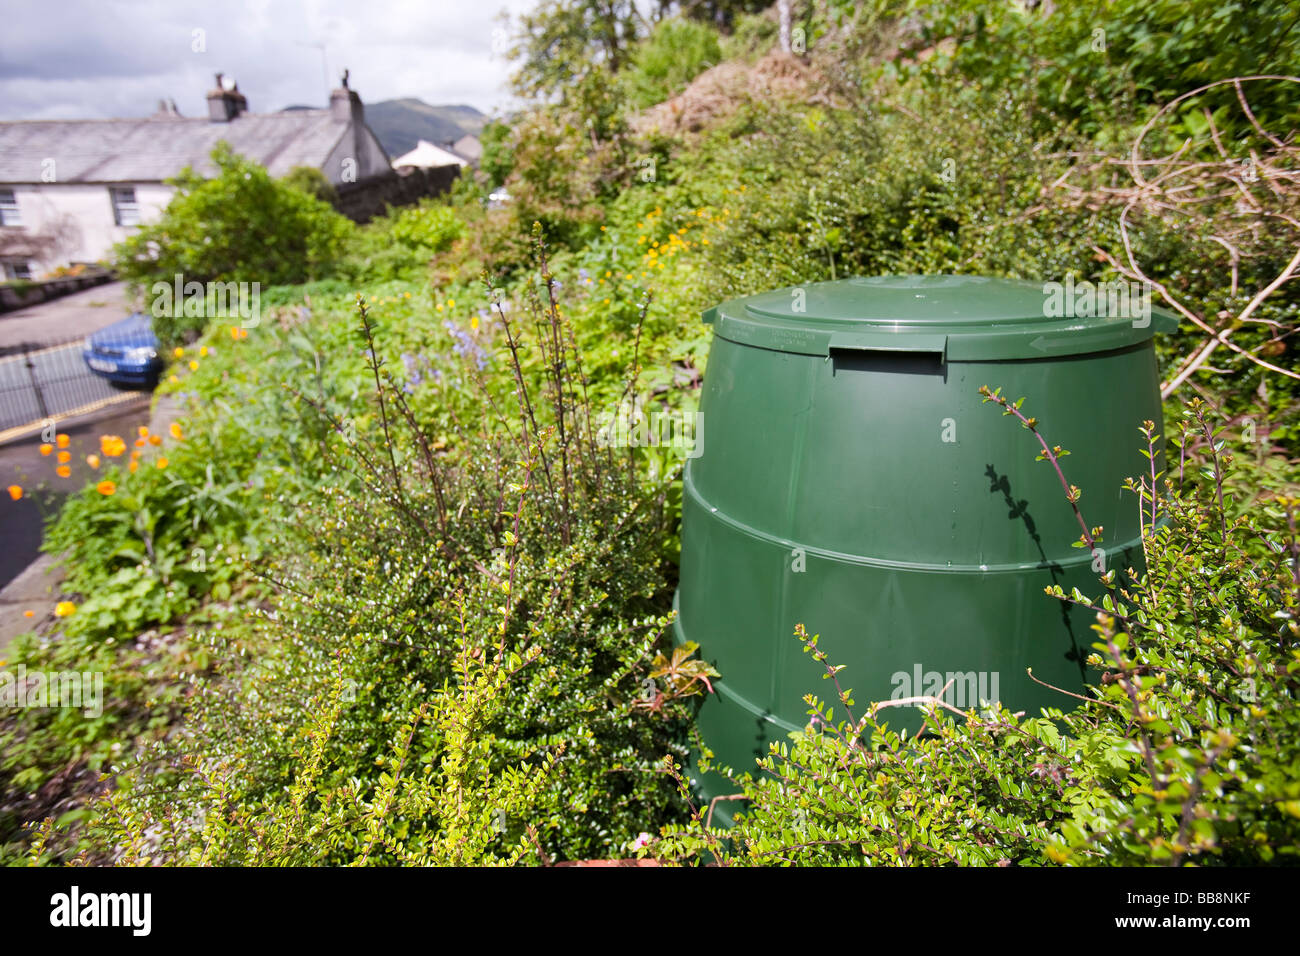 A compost bin in an Ambleside garden, UK Stock Photo